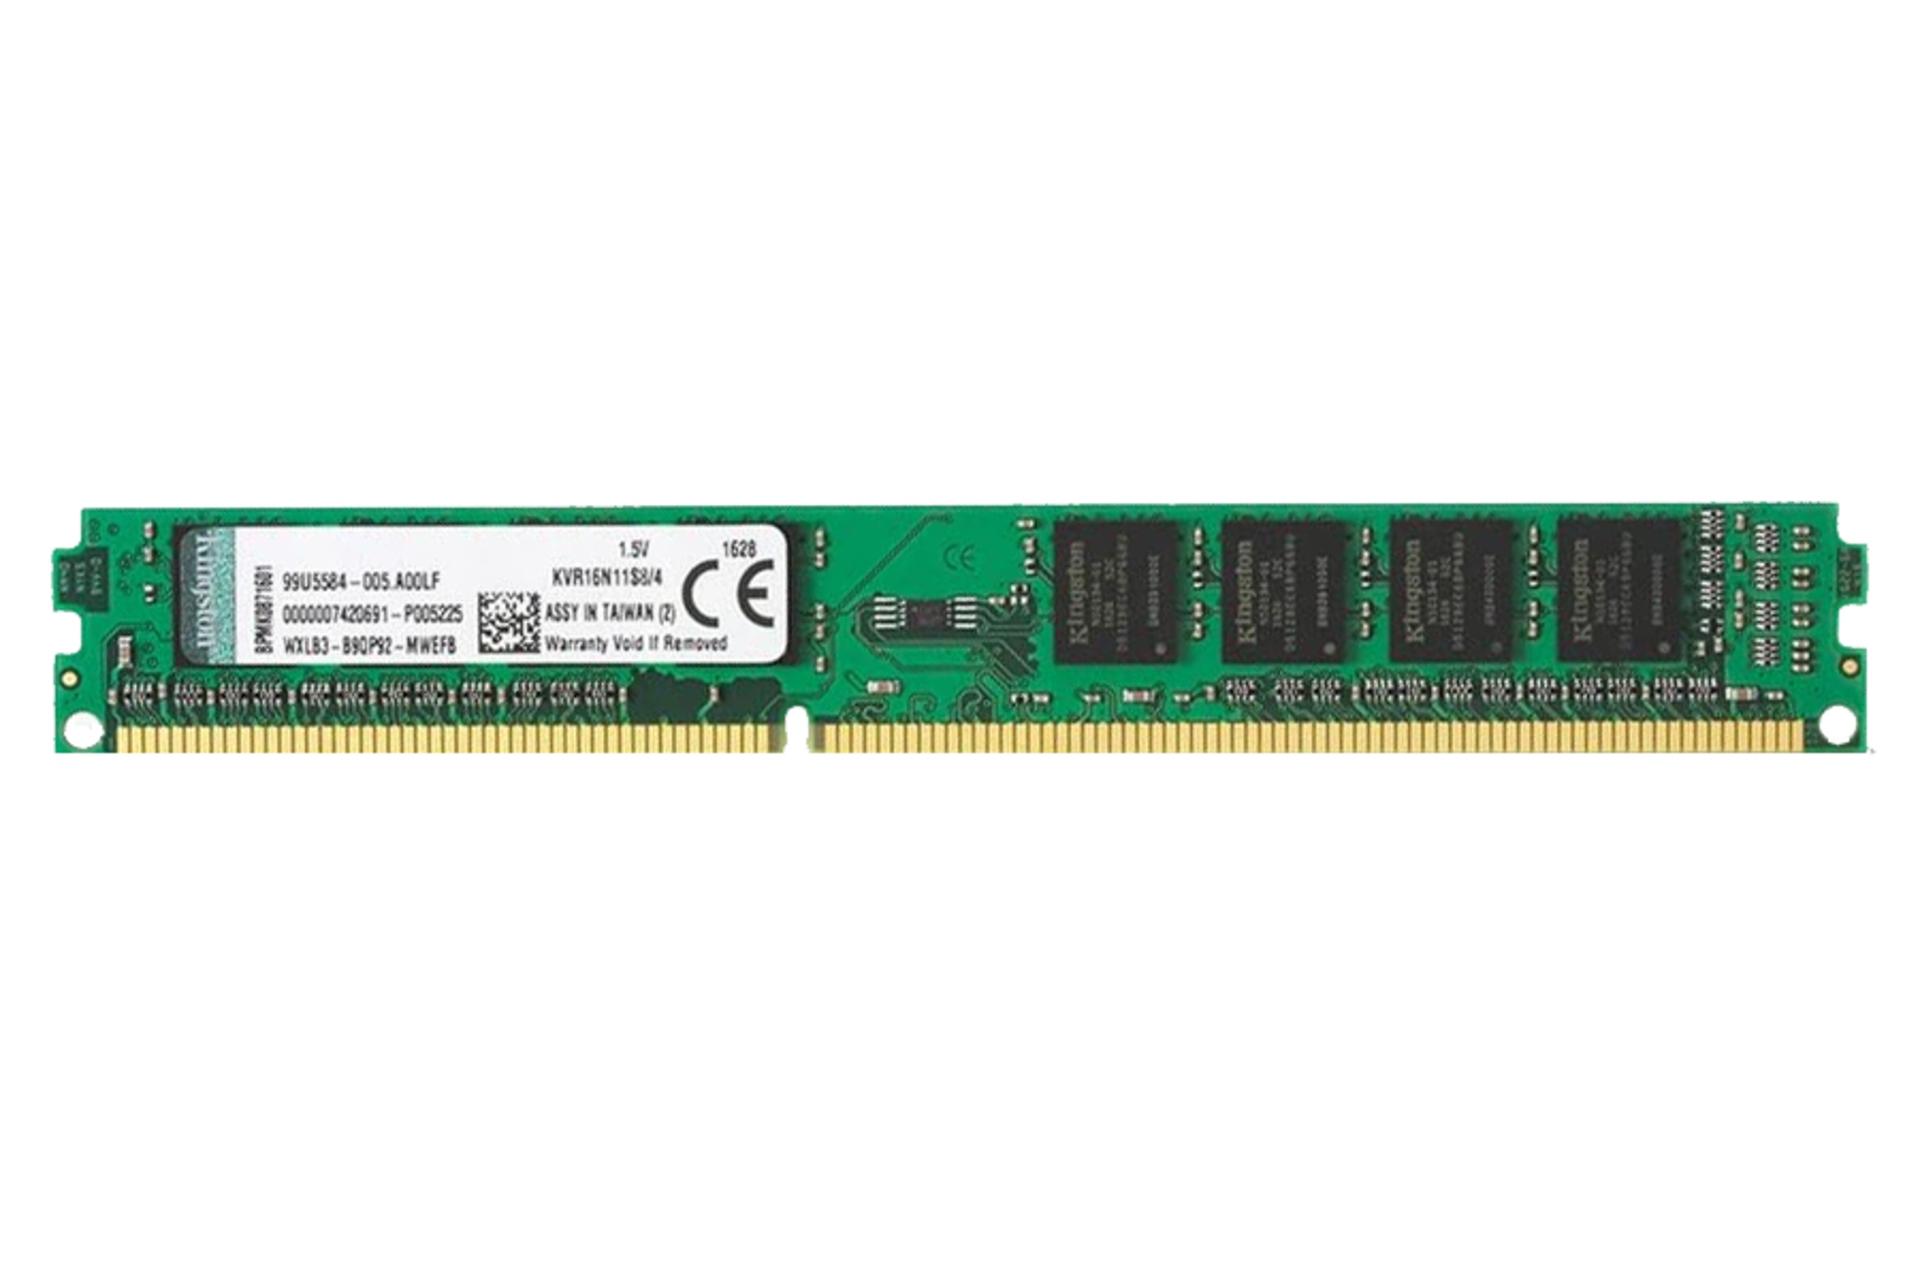 مرجع متخصصين ايران نماي جلو رم كينگستون Value RAM ظرفيت 4 گيگابايت از نوع DDR3-1600